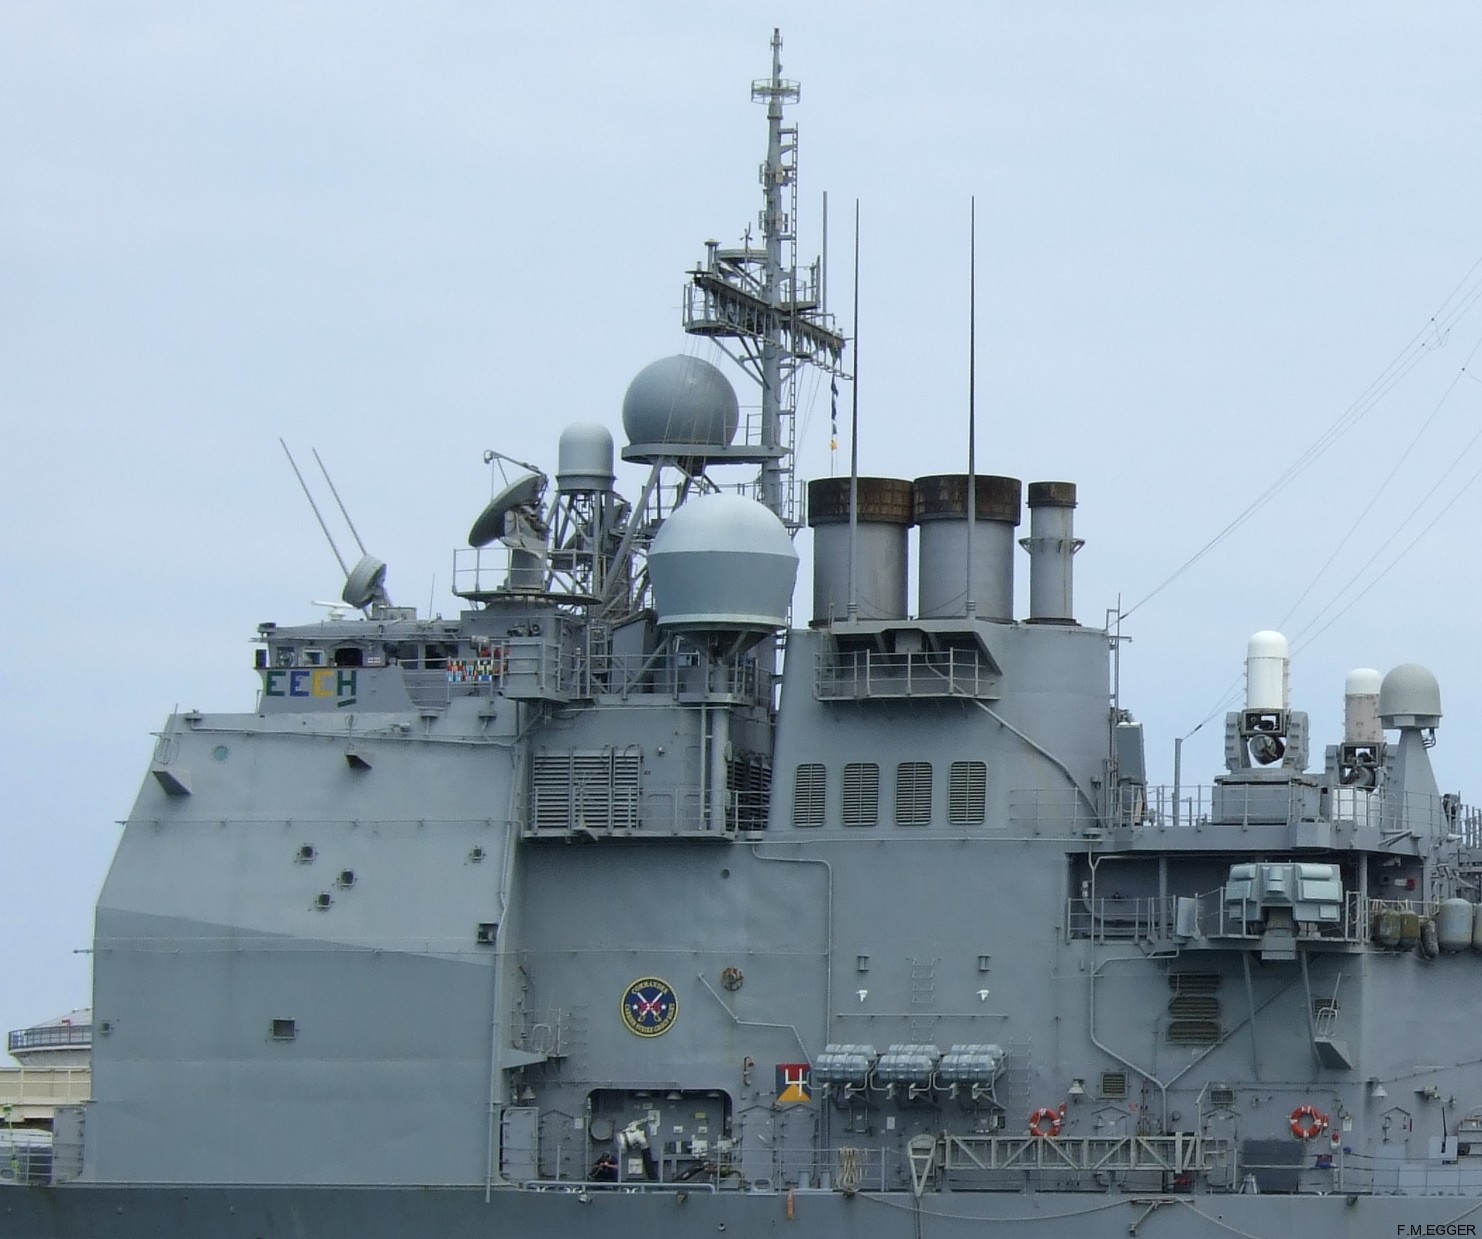 cg-69 uss vicksburg ticonderoga class guided missile cruiser us navy 33x